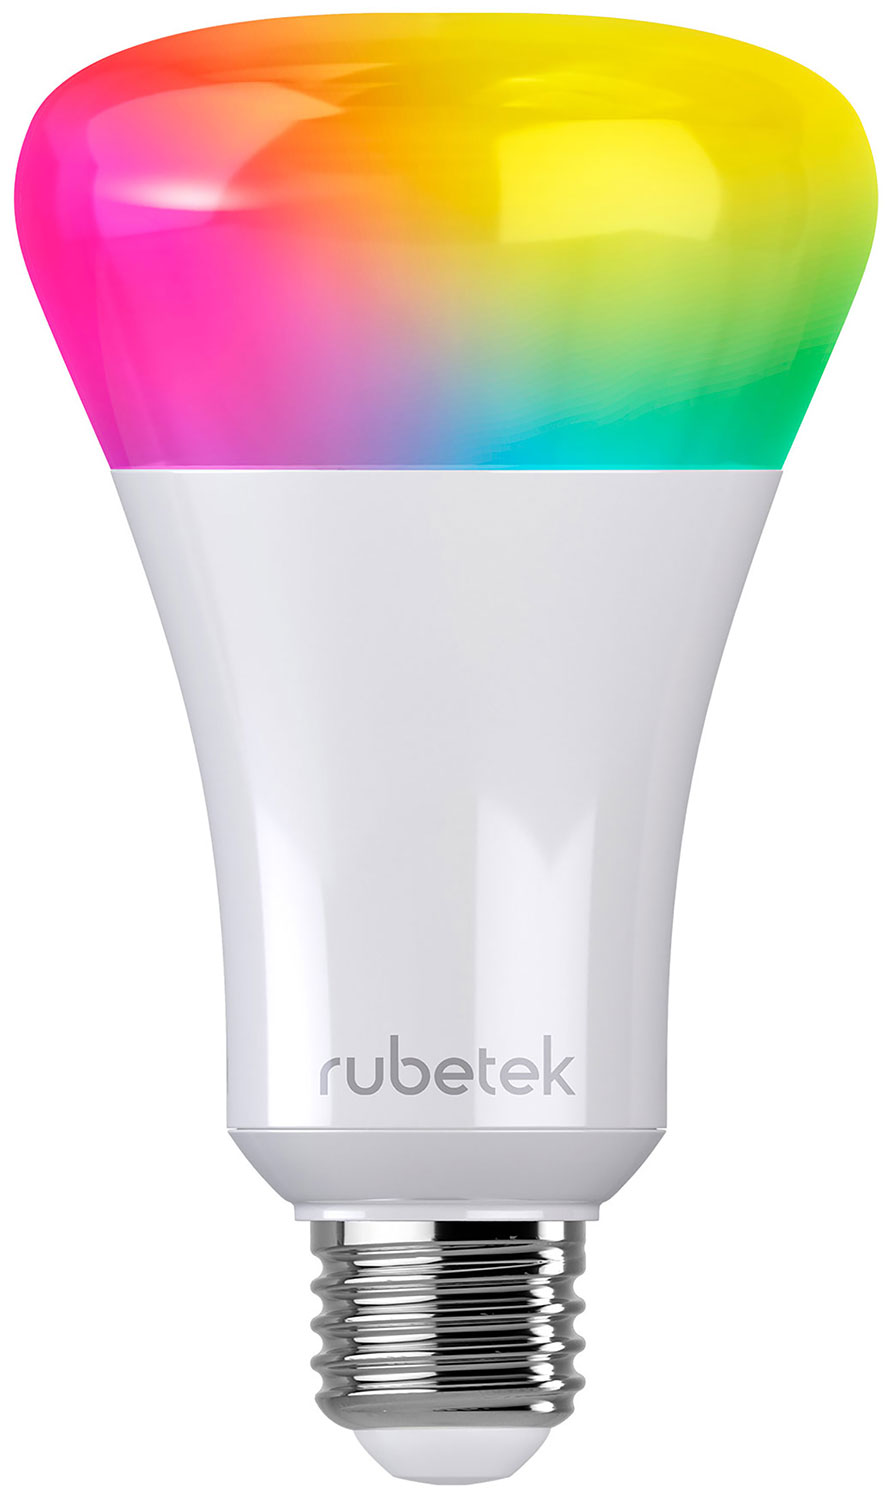 Wi-Fi лампа Rubetek RL-3103 rubetek smart button rl 3337